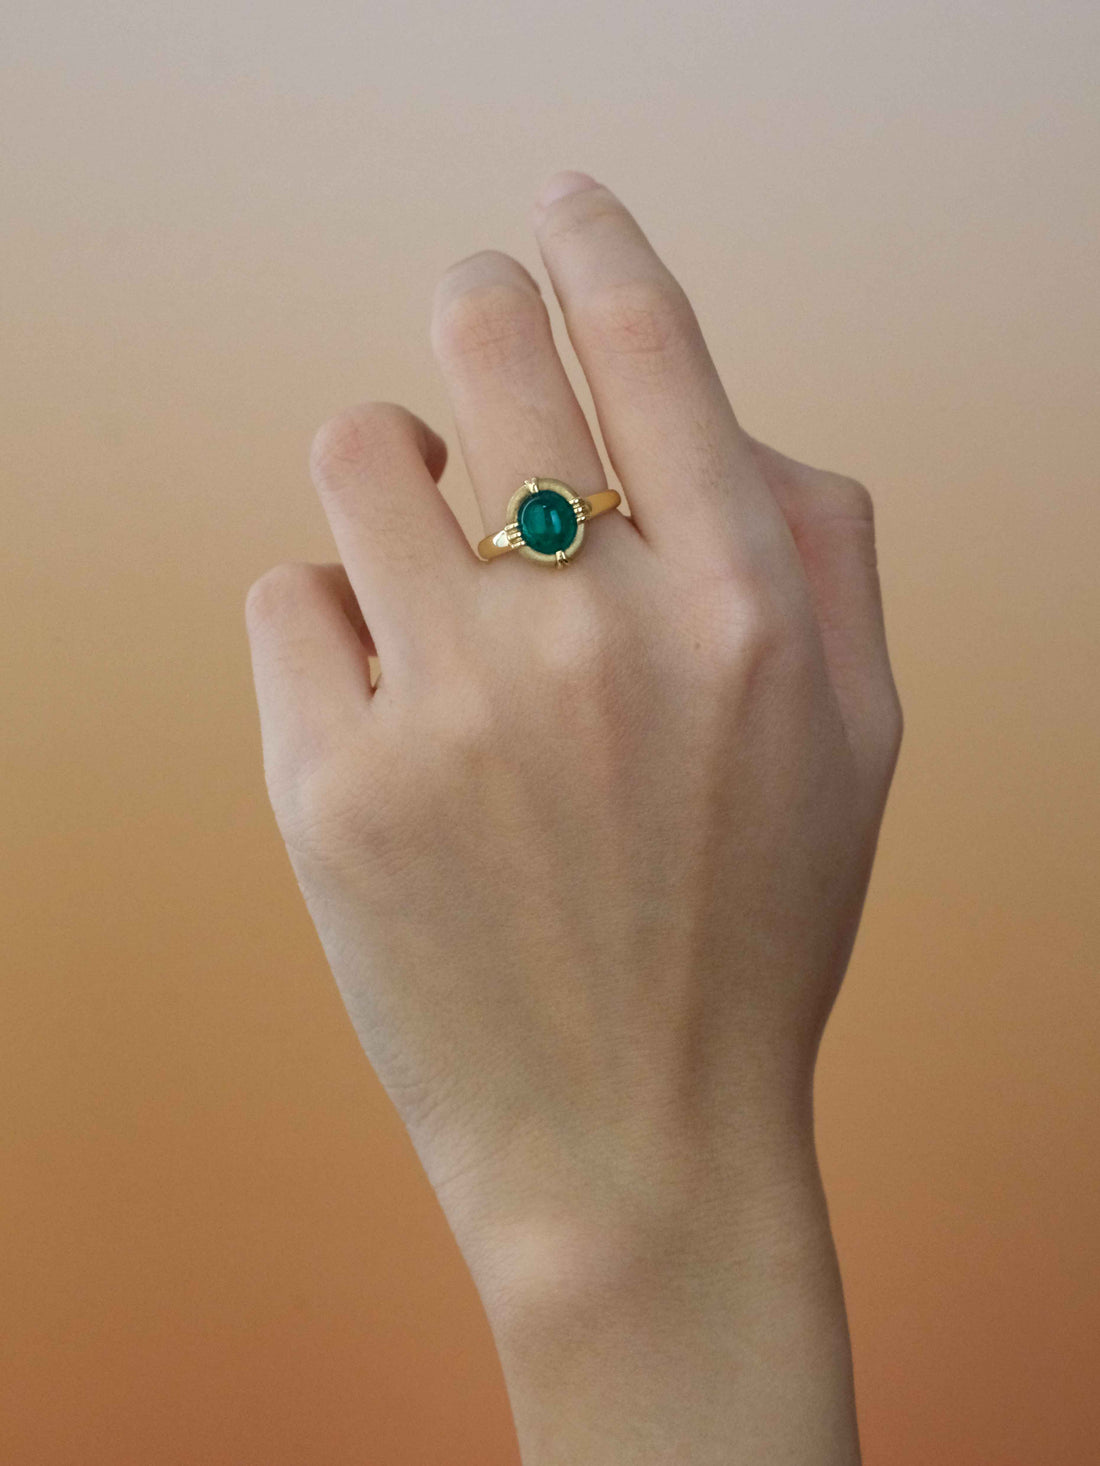 Vintage Oval Cabochon Emerald Ring, 18k solid gold